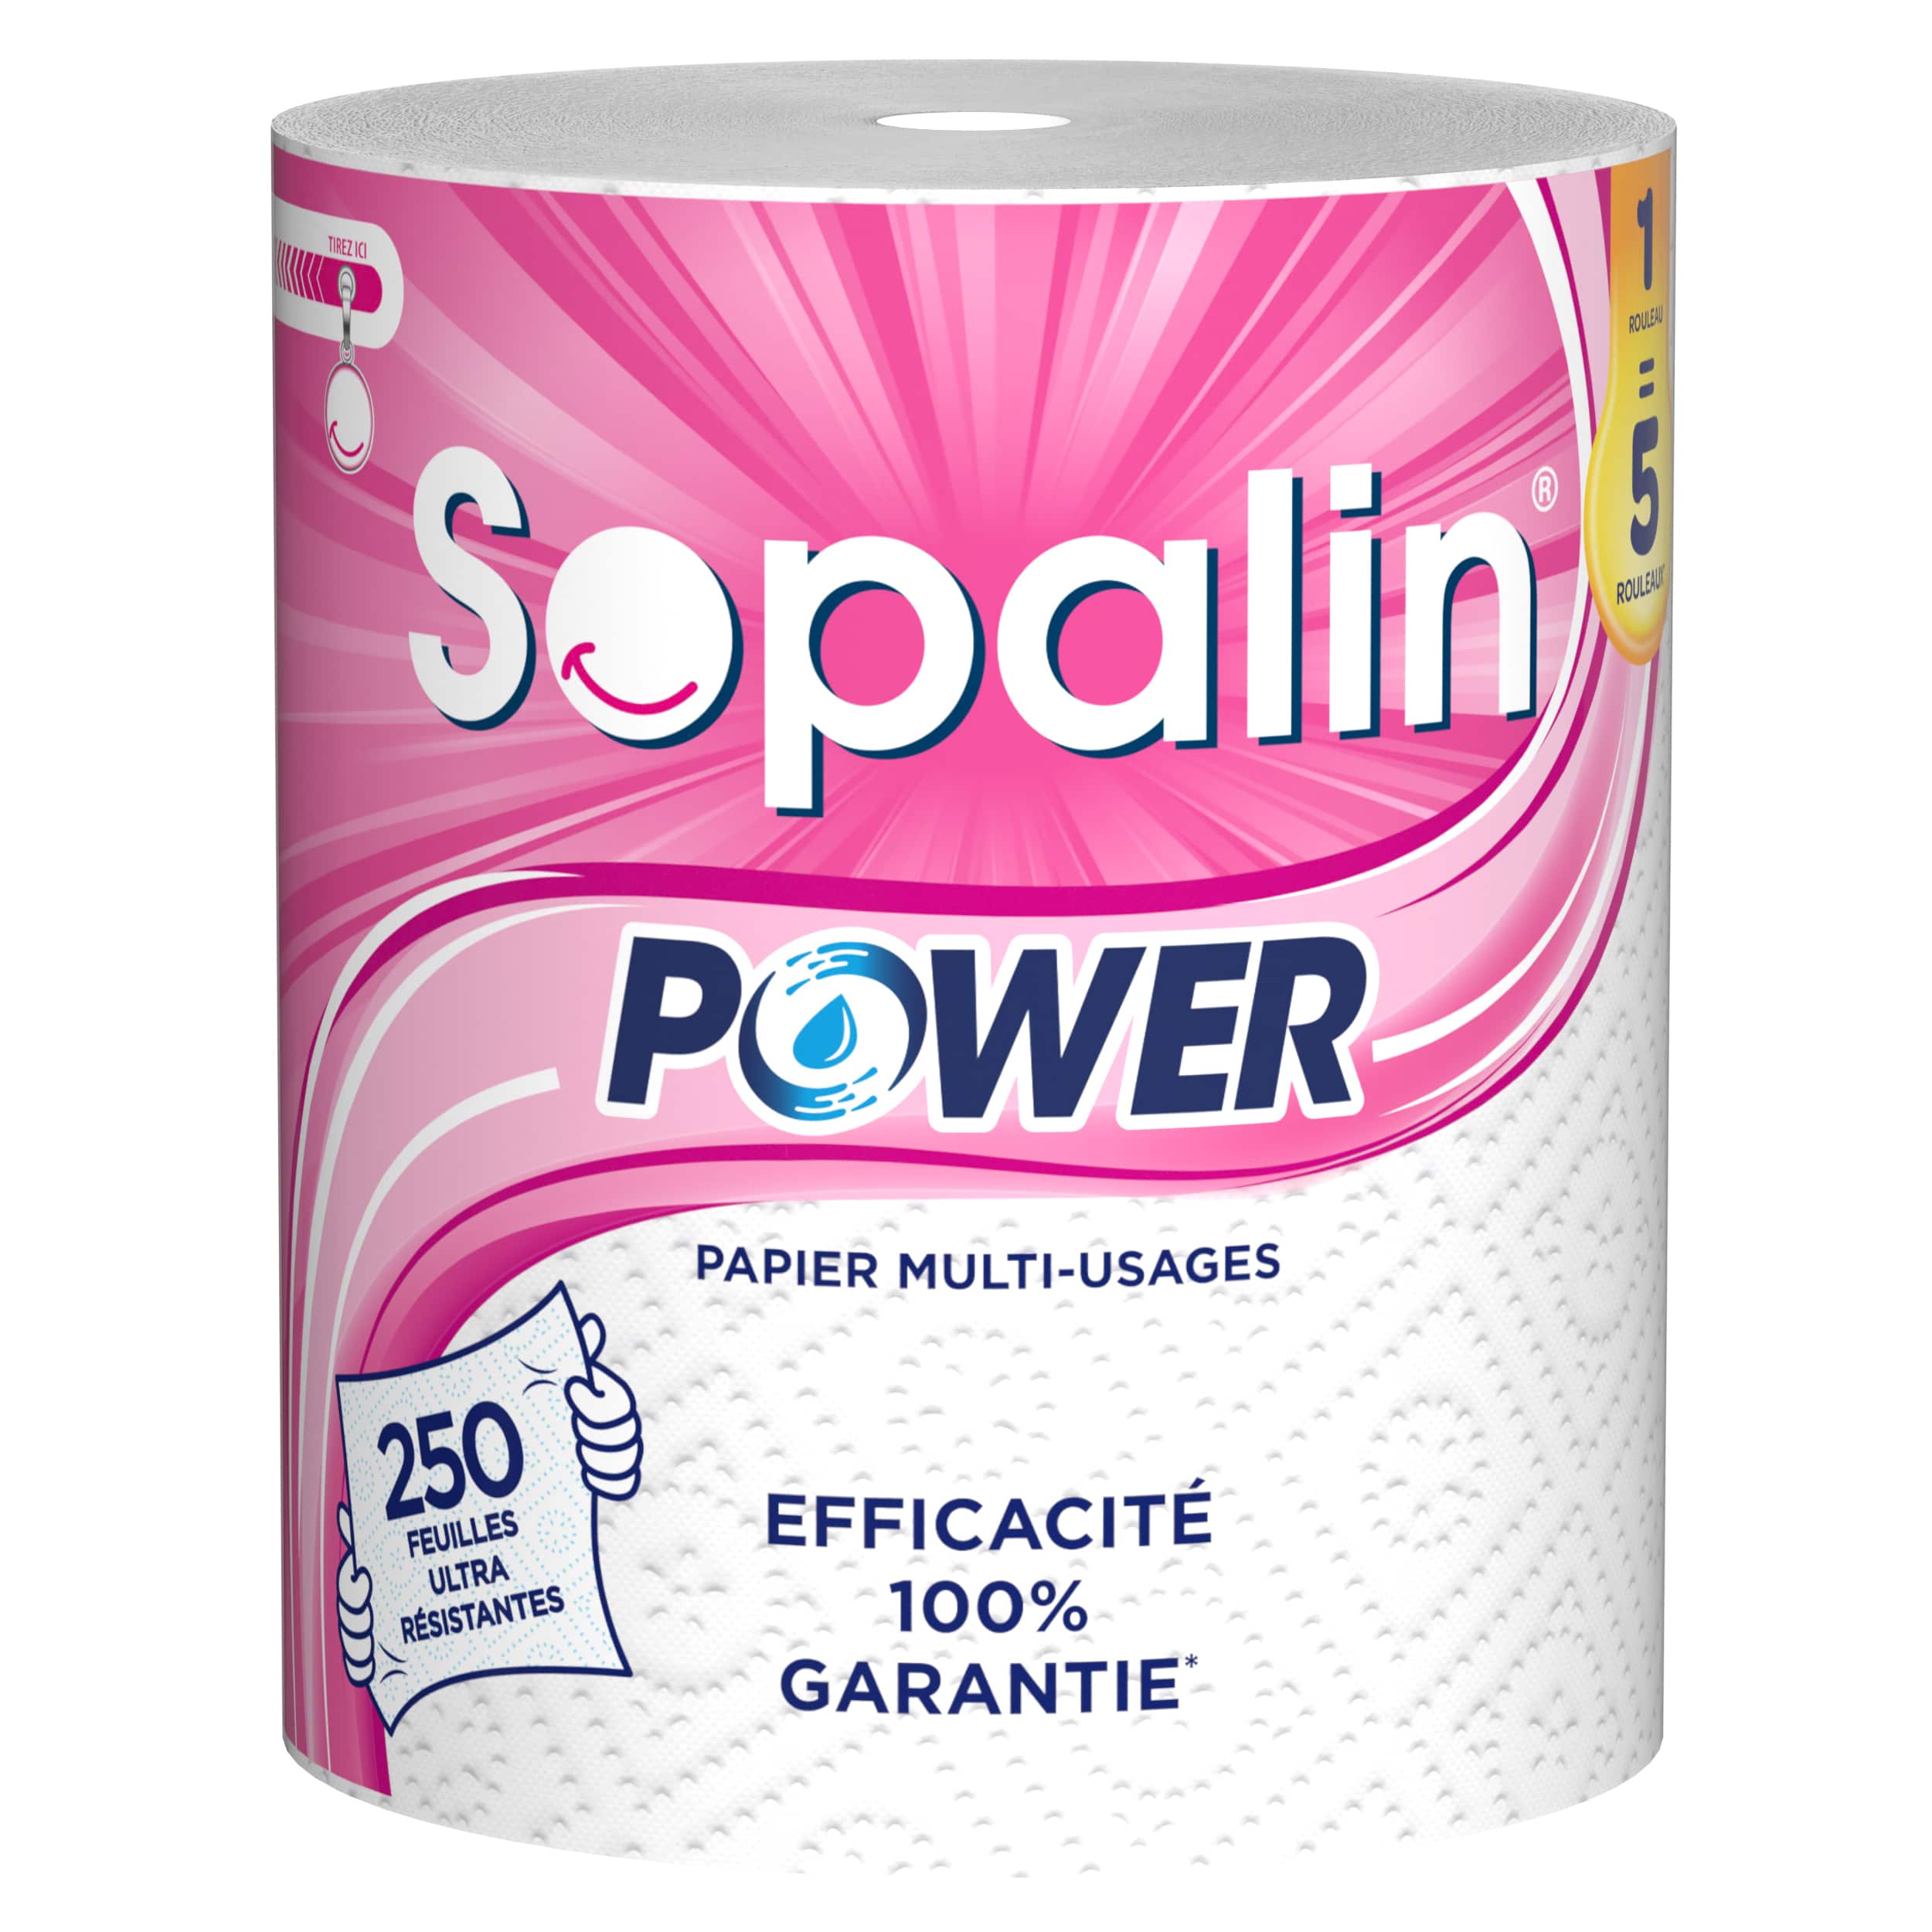 Sopalin® Power - Sopalin®